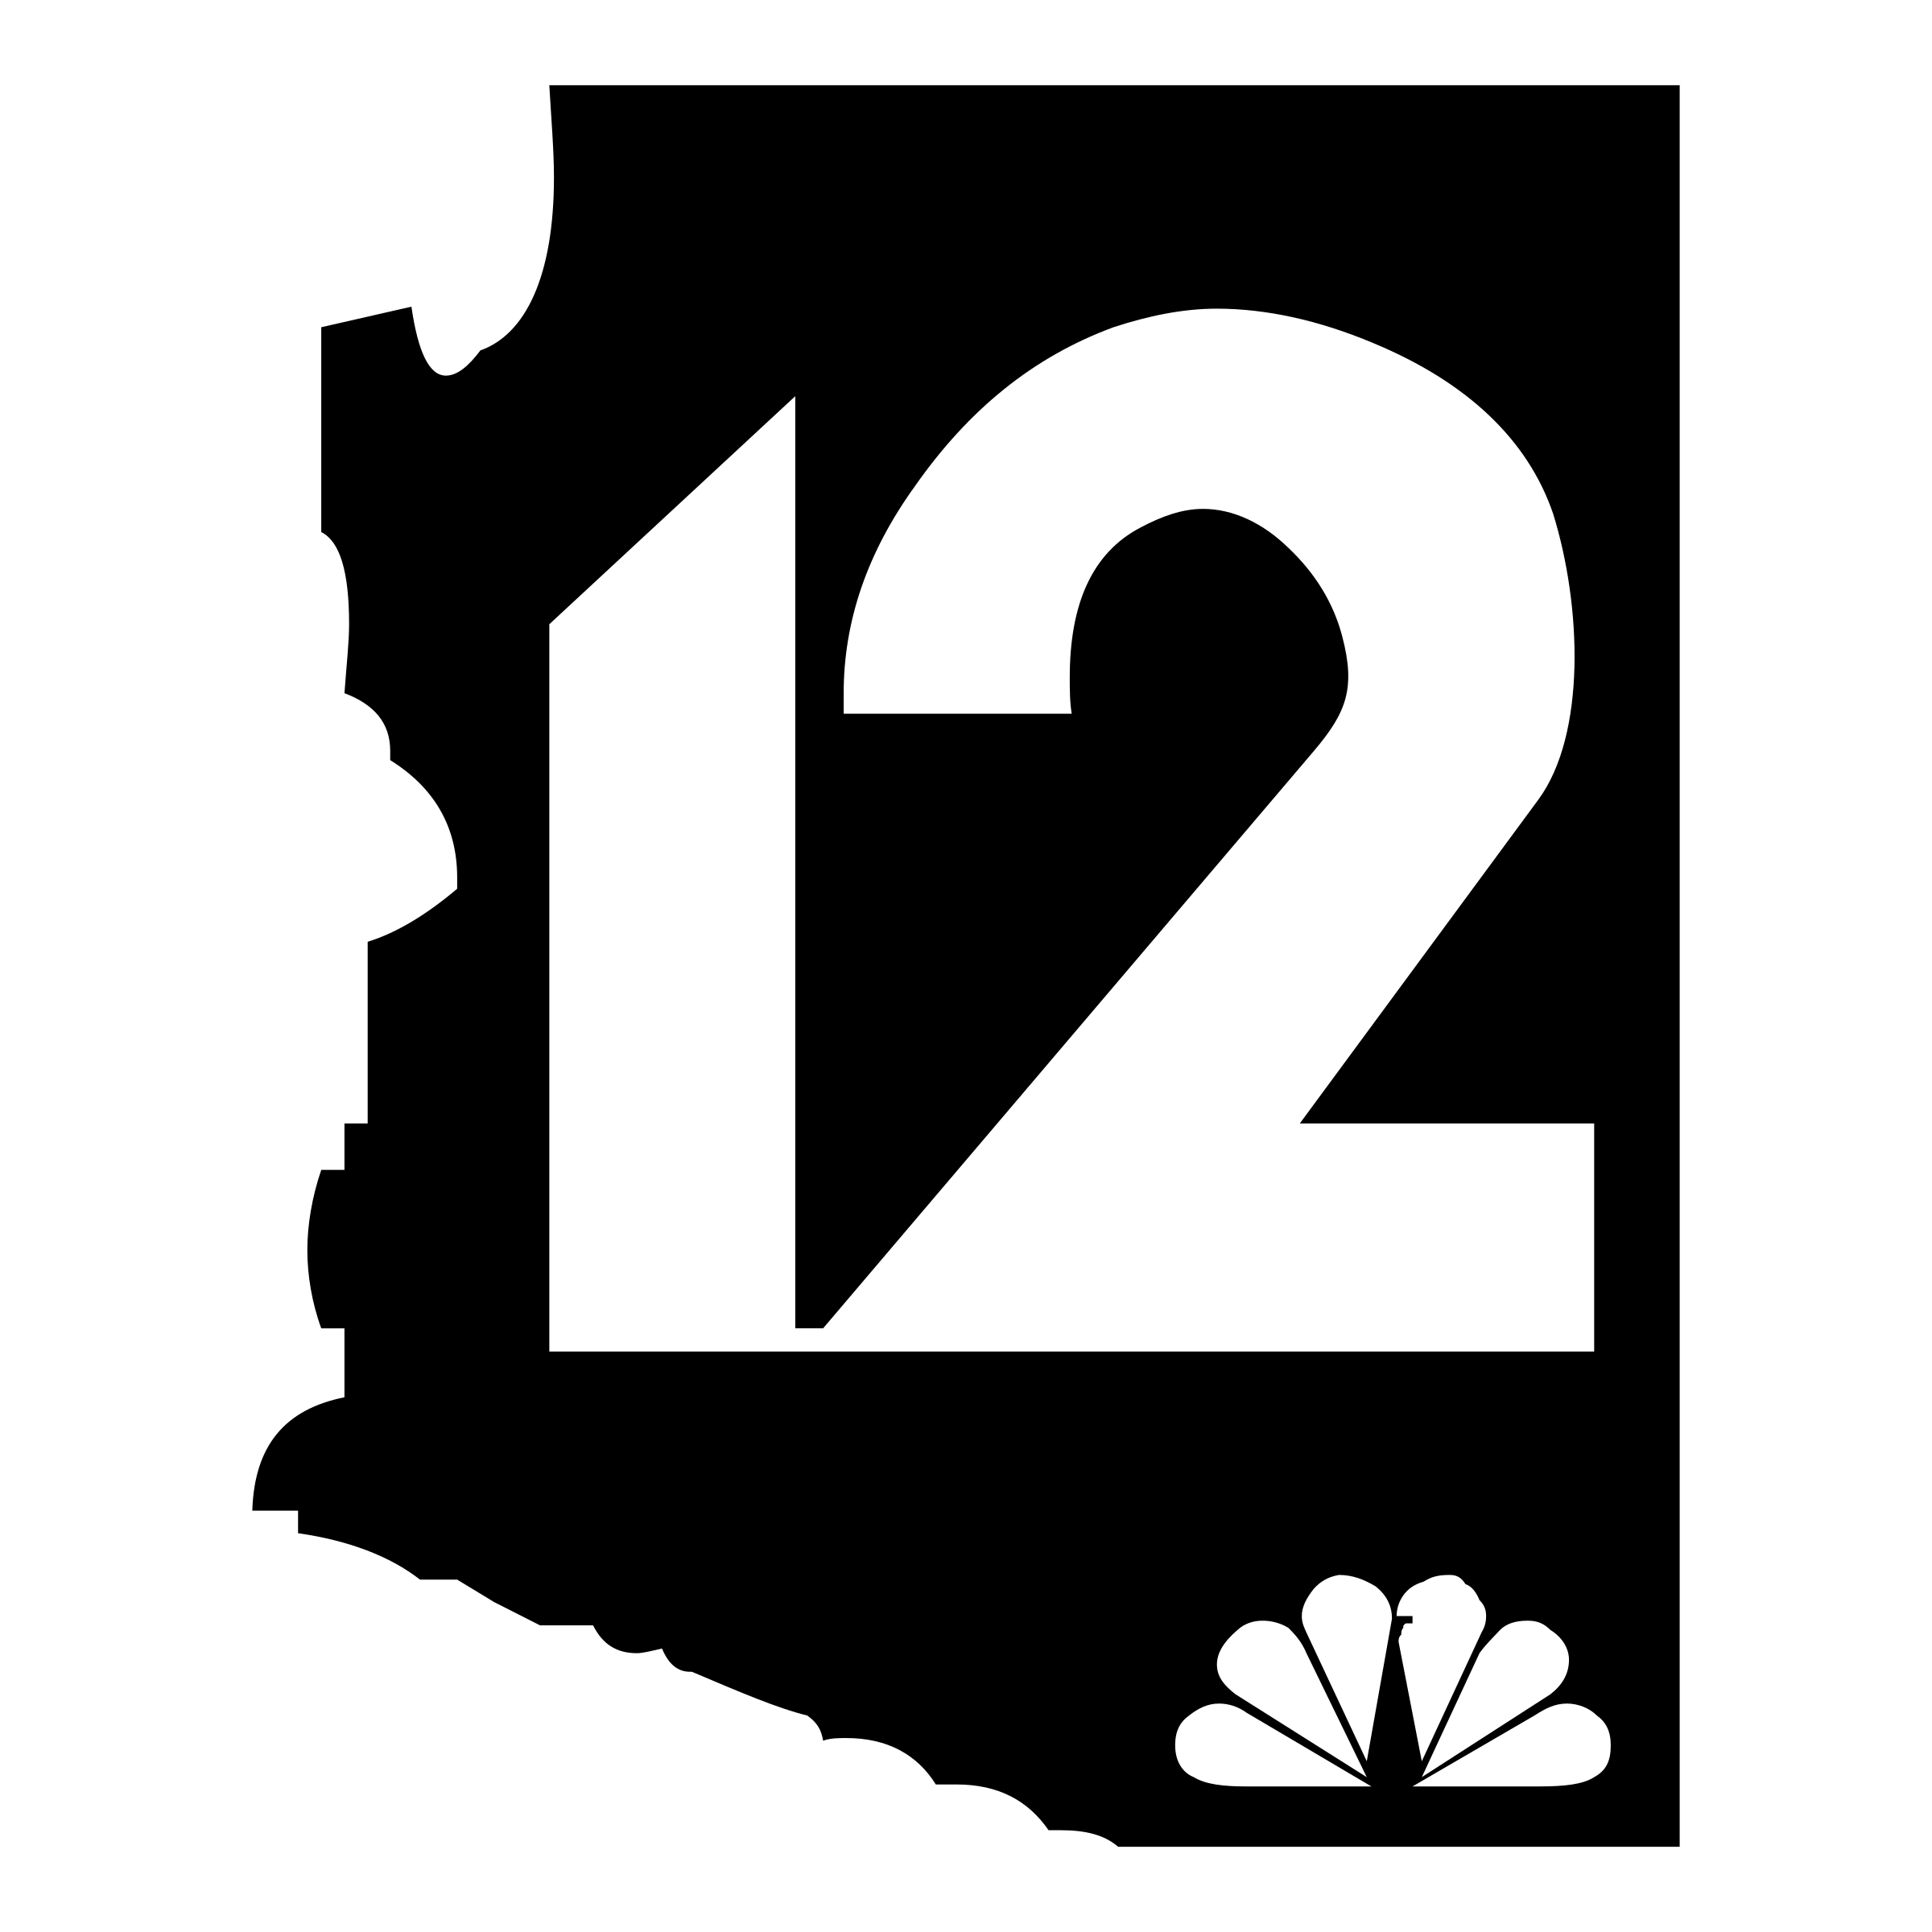 NBC12 Logo - NBC 12 Logo PNG Transparent & SVG Vector - Freebie Supply